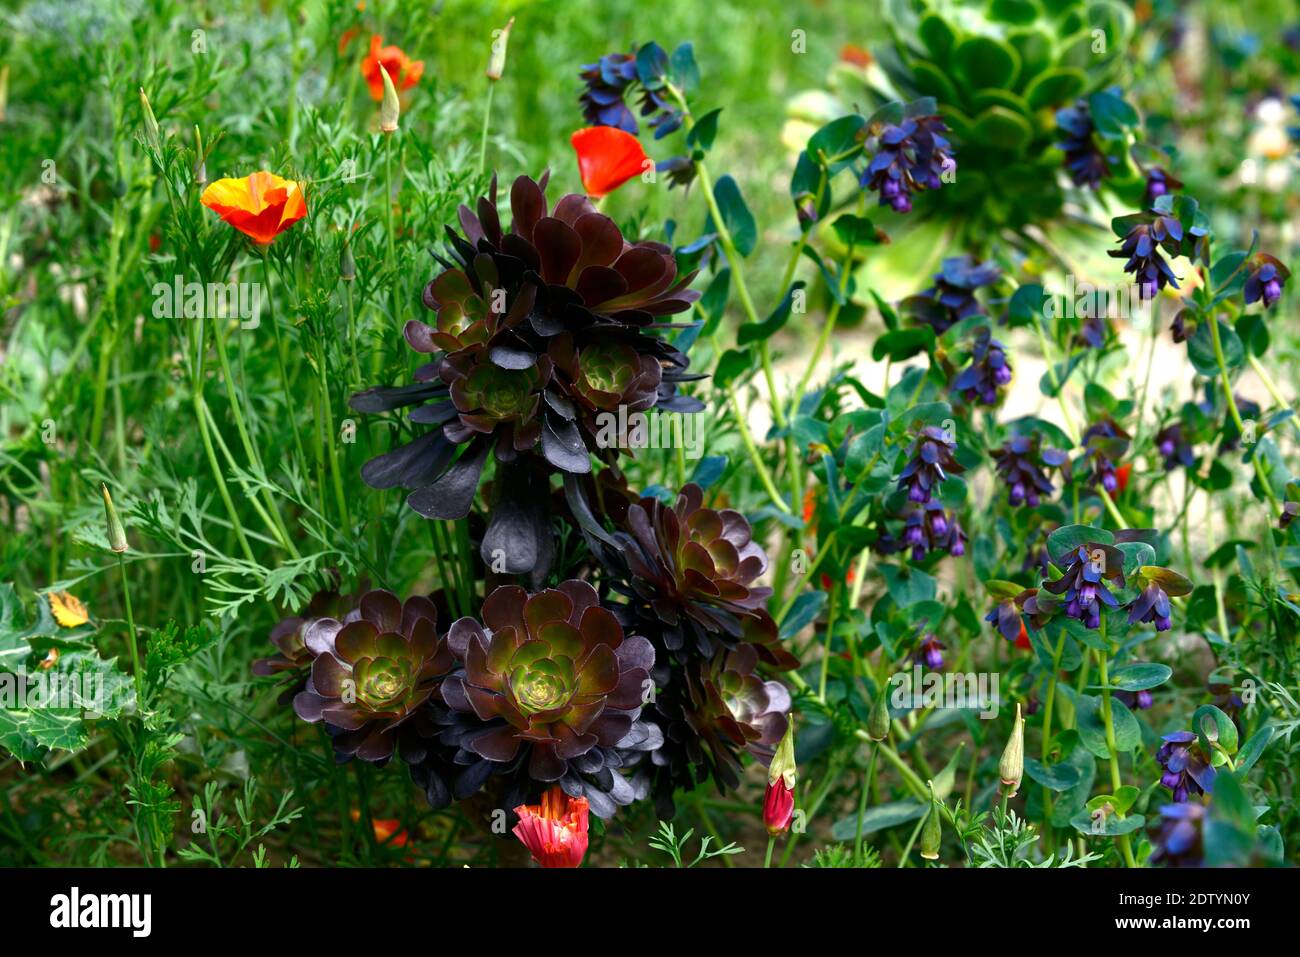 aeonium schwarzkopf,aeonium schwarzkop,rosette,foglie,succulente,succulenti,cerinthe major,Eschscholzia californica,impianto misto, RM Floral Foto Stock